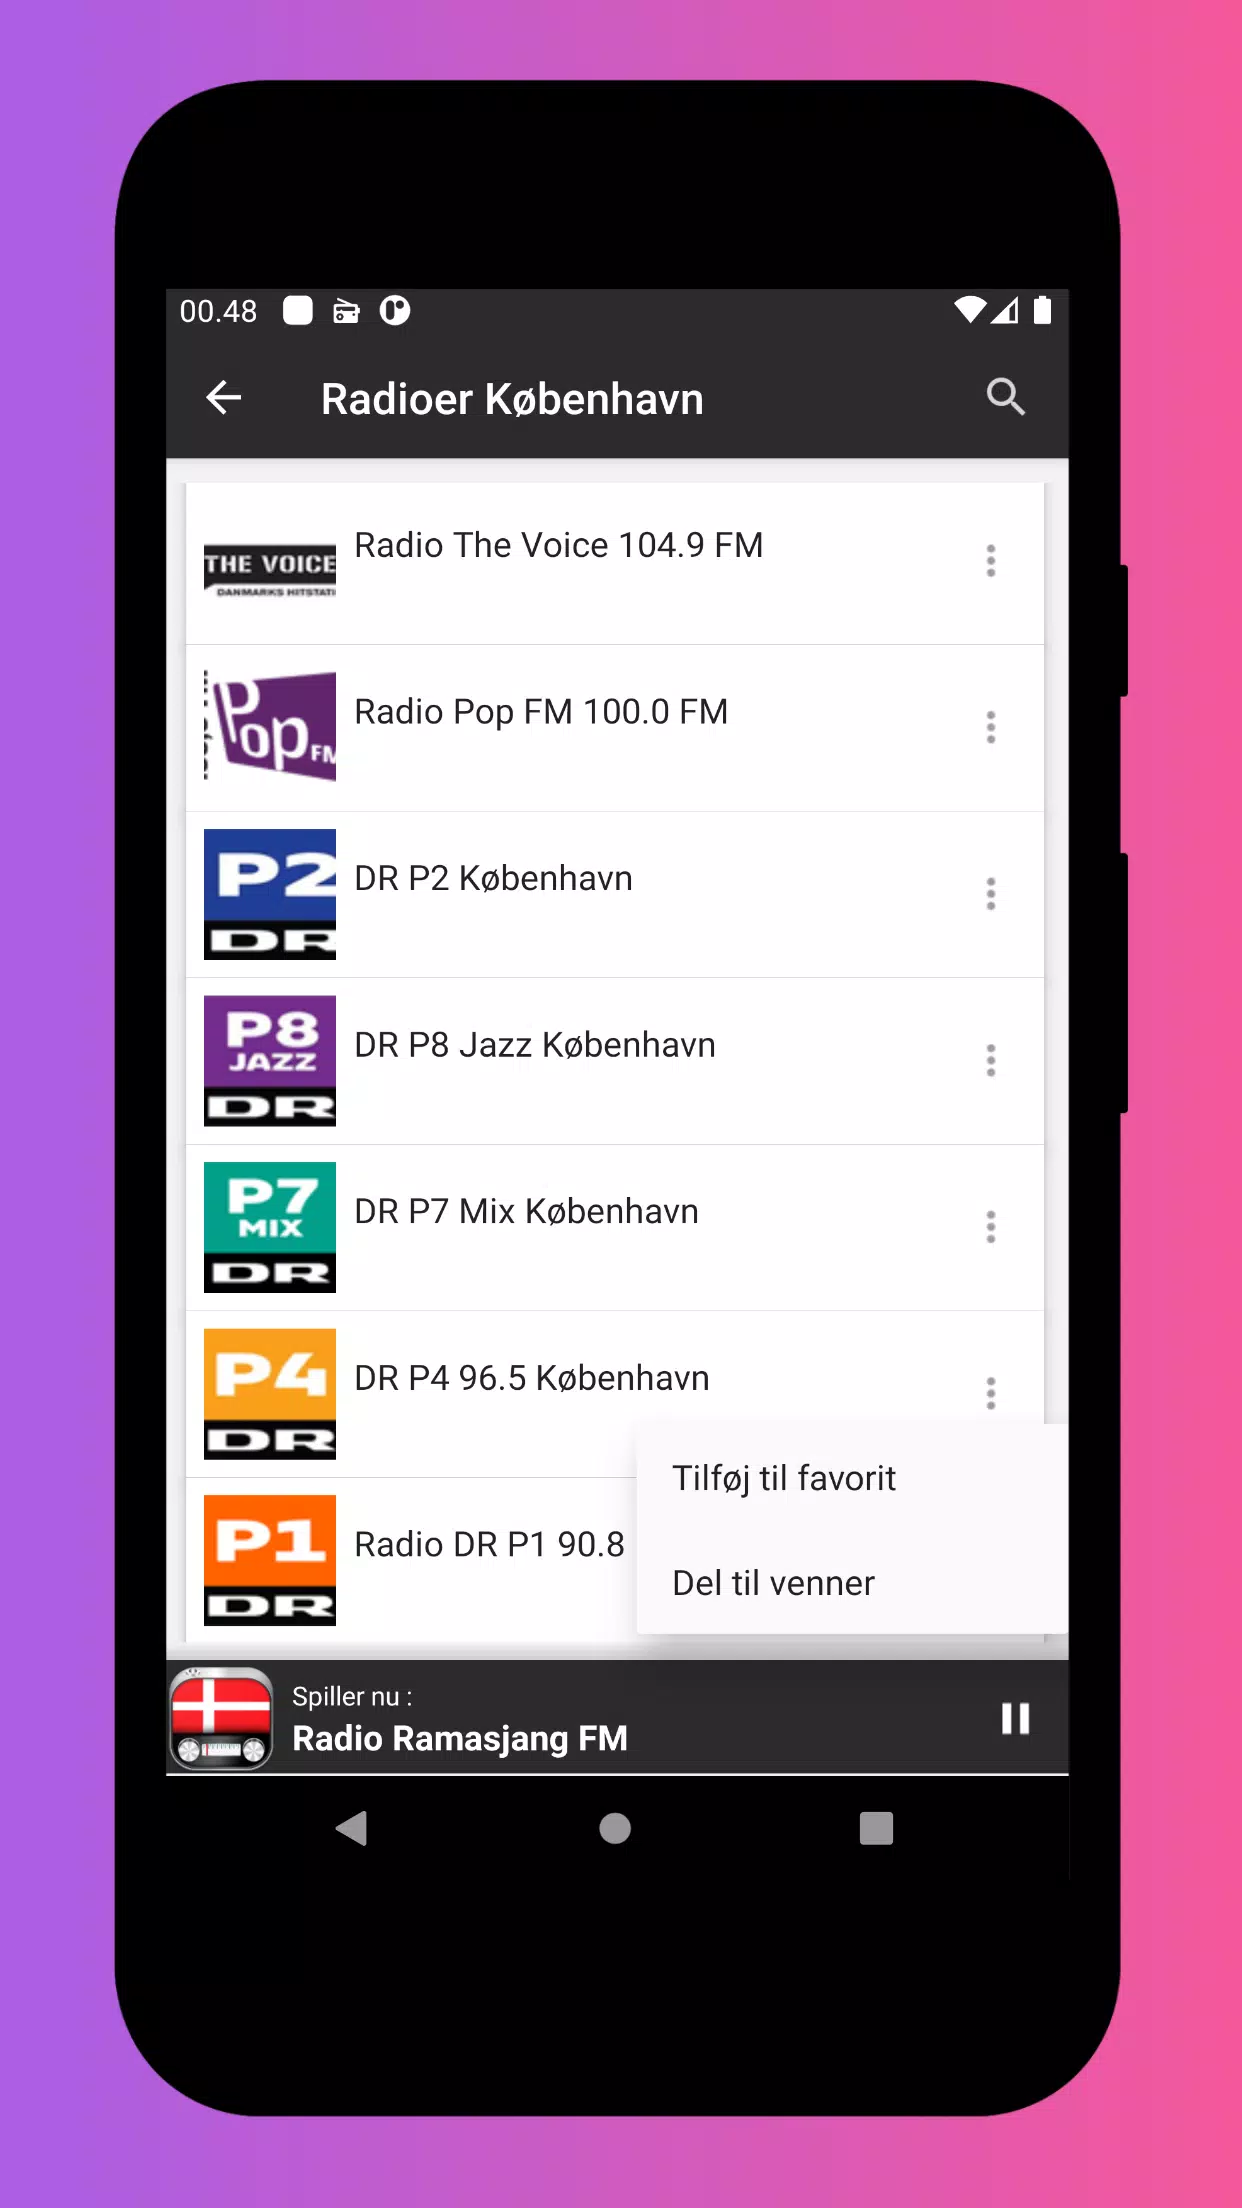 Radio Denmark FM - DAB Radio APK for Android Download